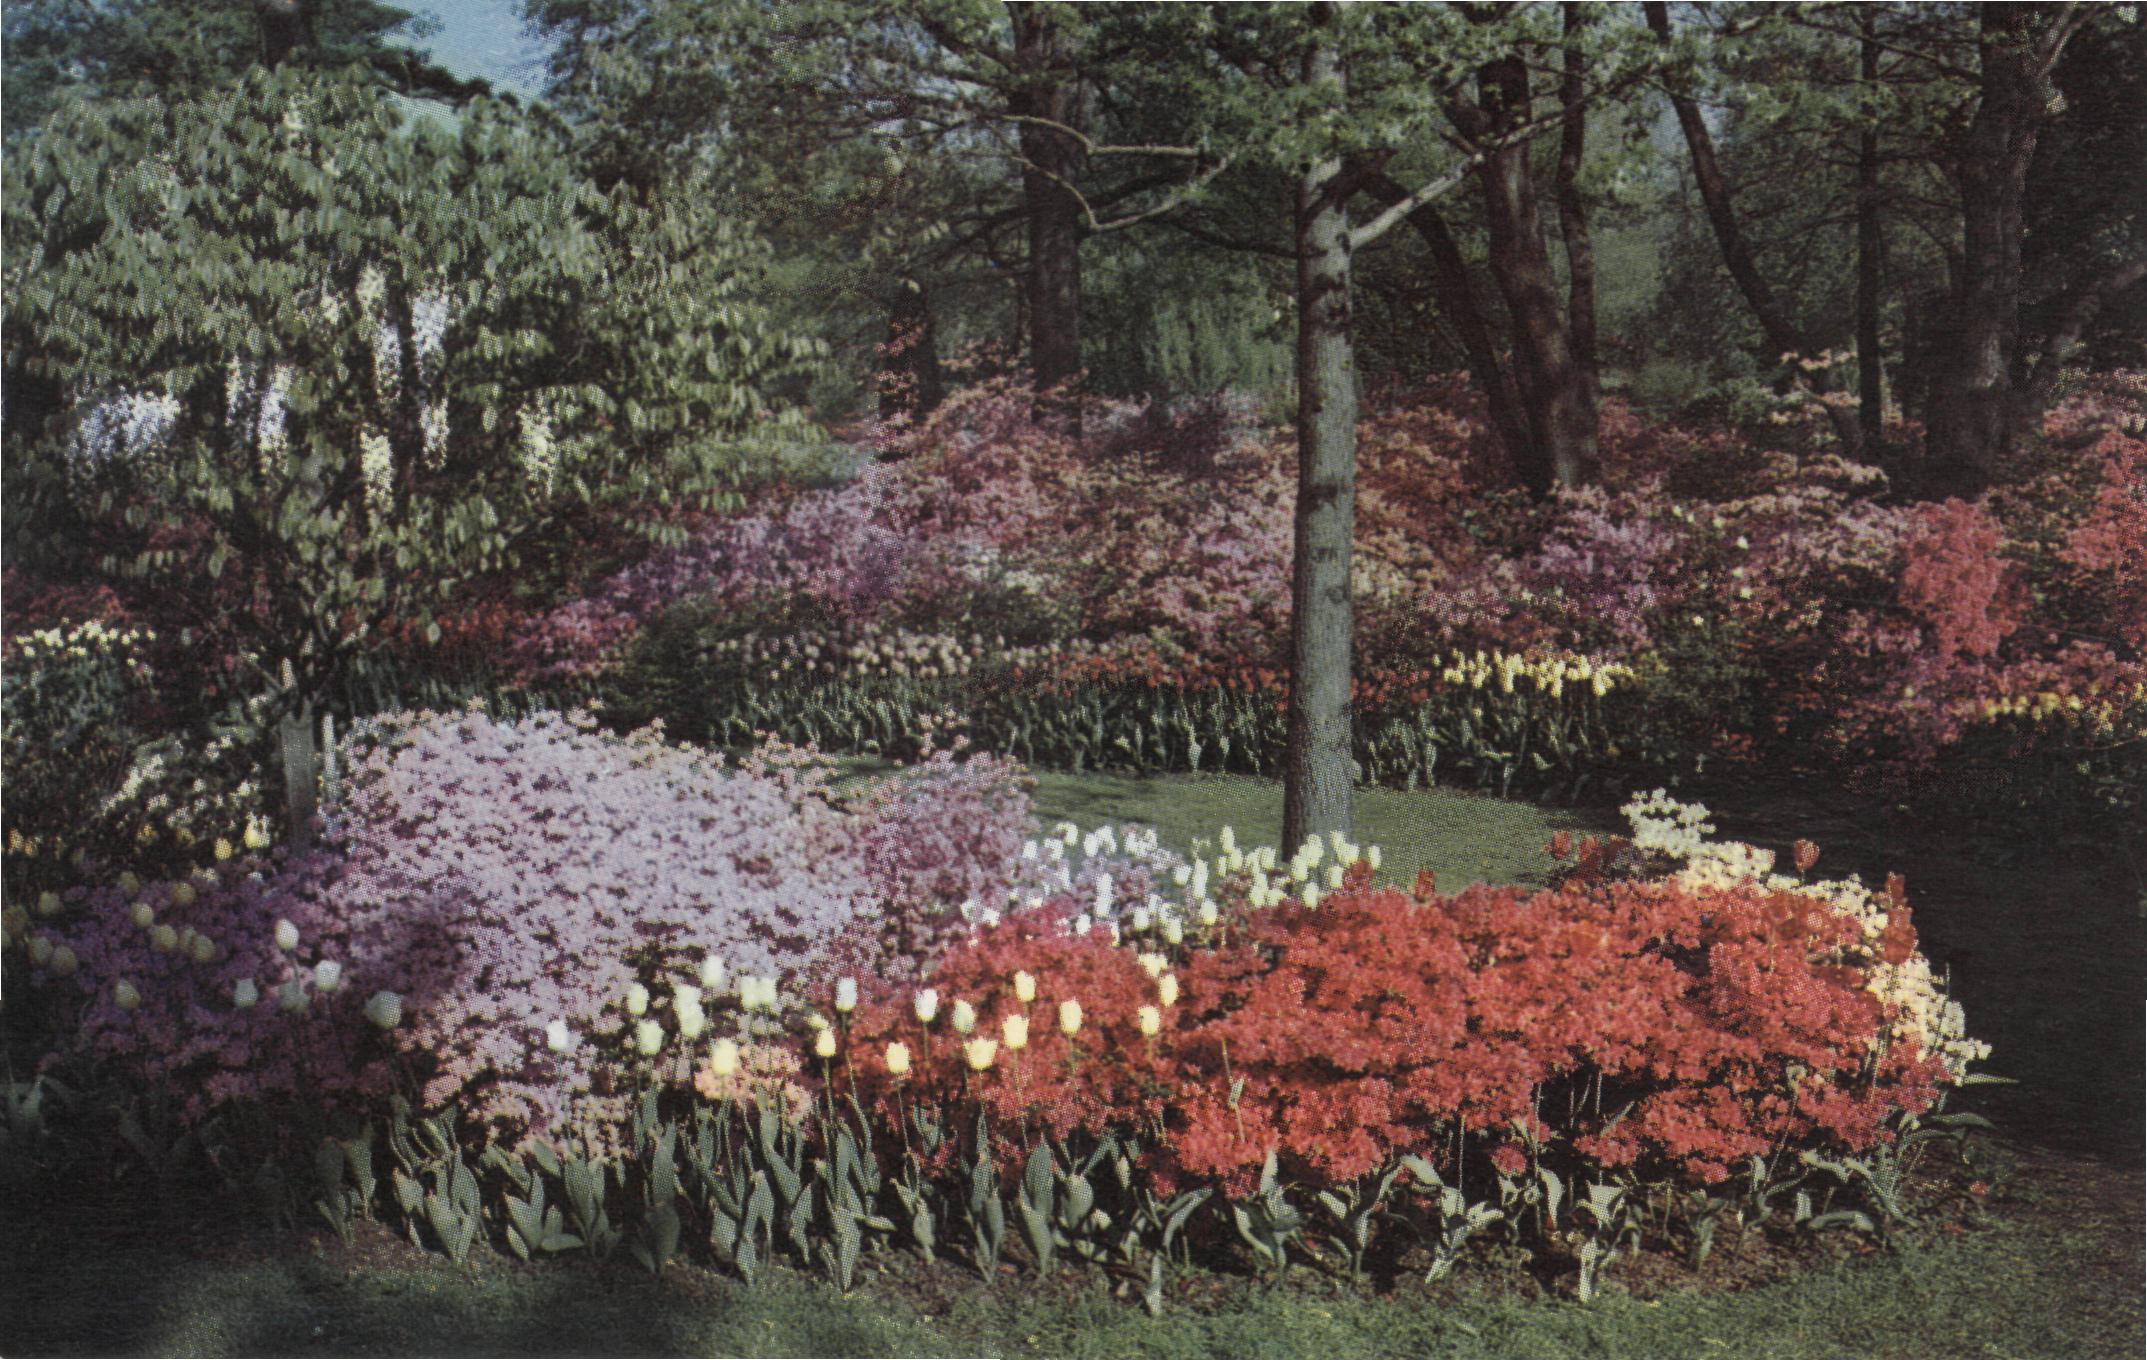 Postcard of Flowers at Sherwood Gardens, circa 1970s